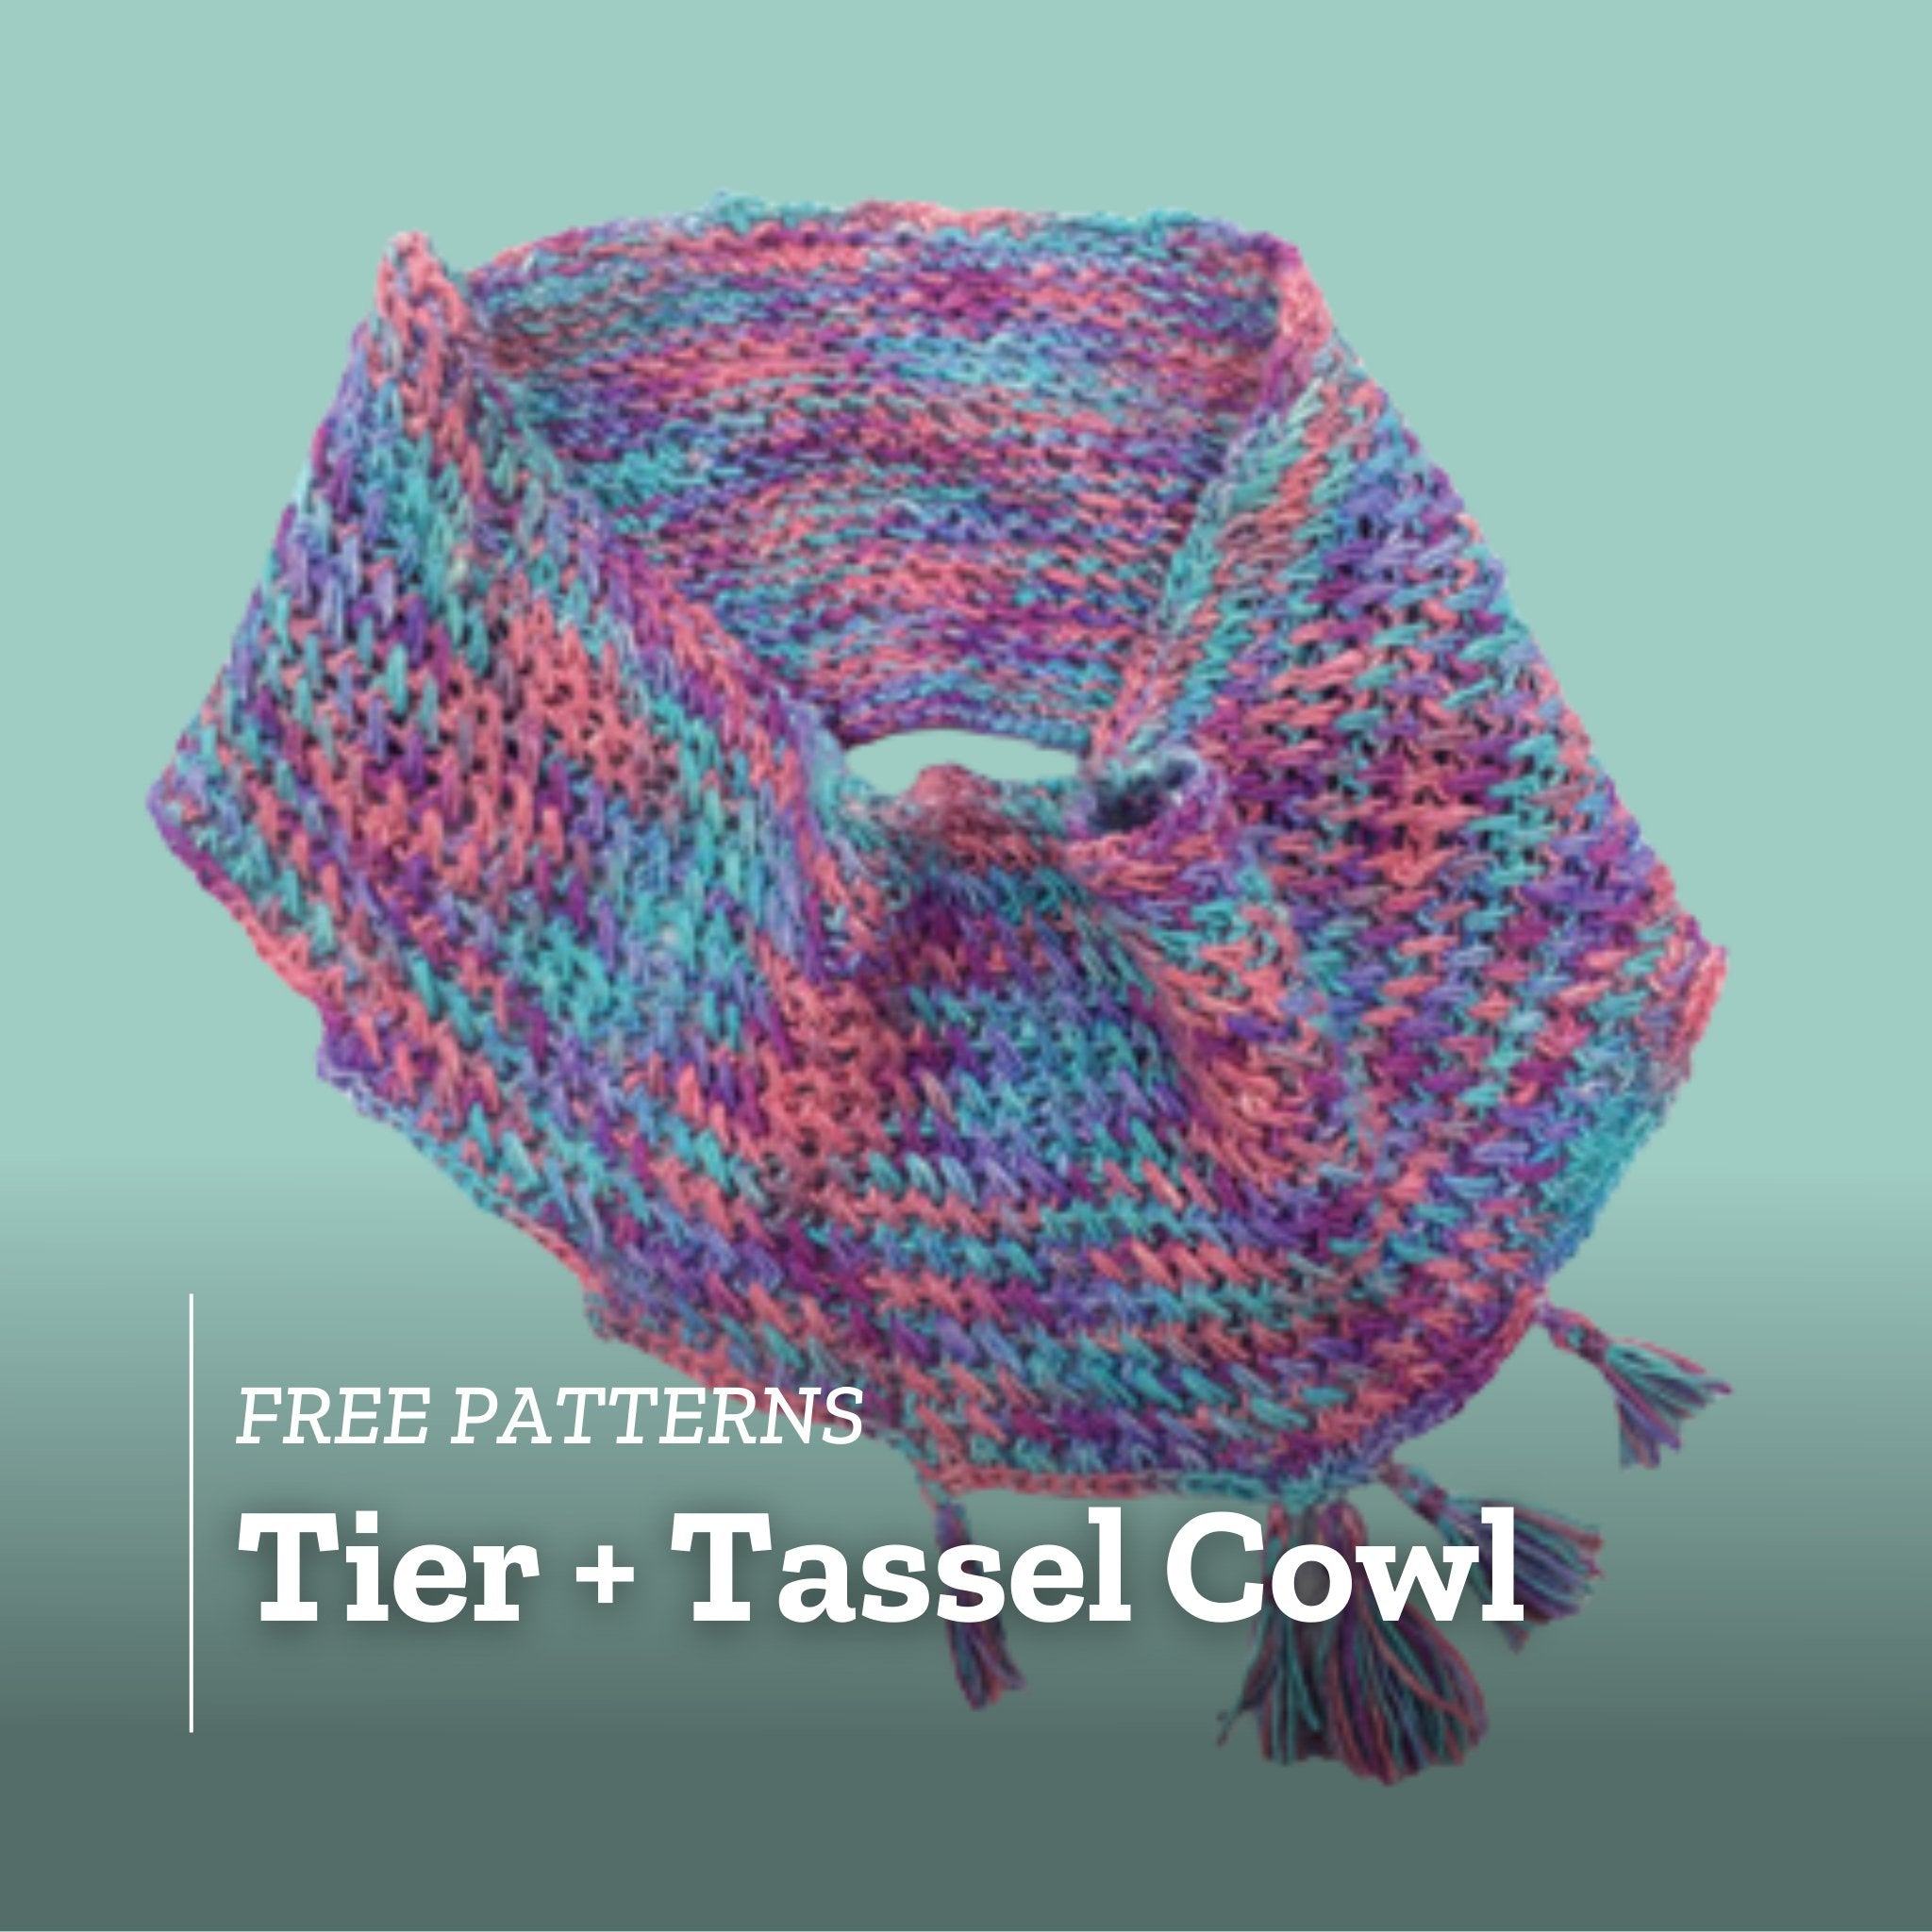 How Do You Match A Crochet Hook To Your Yarn? – Darn Good Yarn